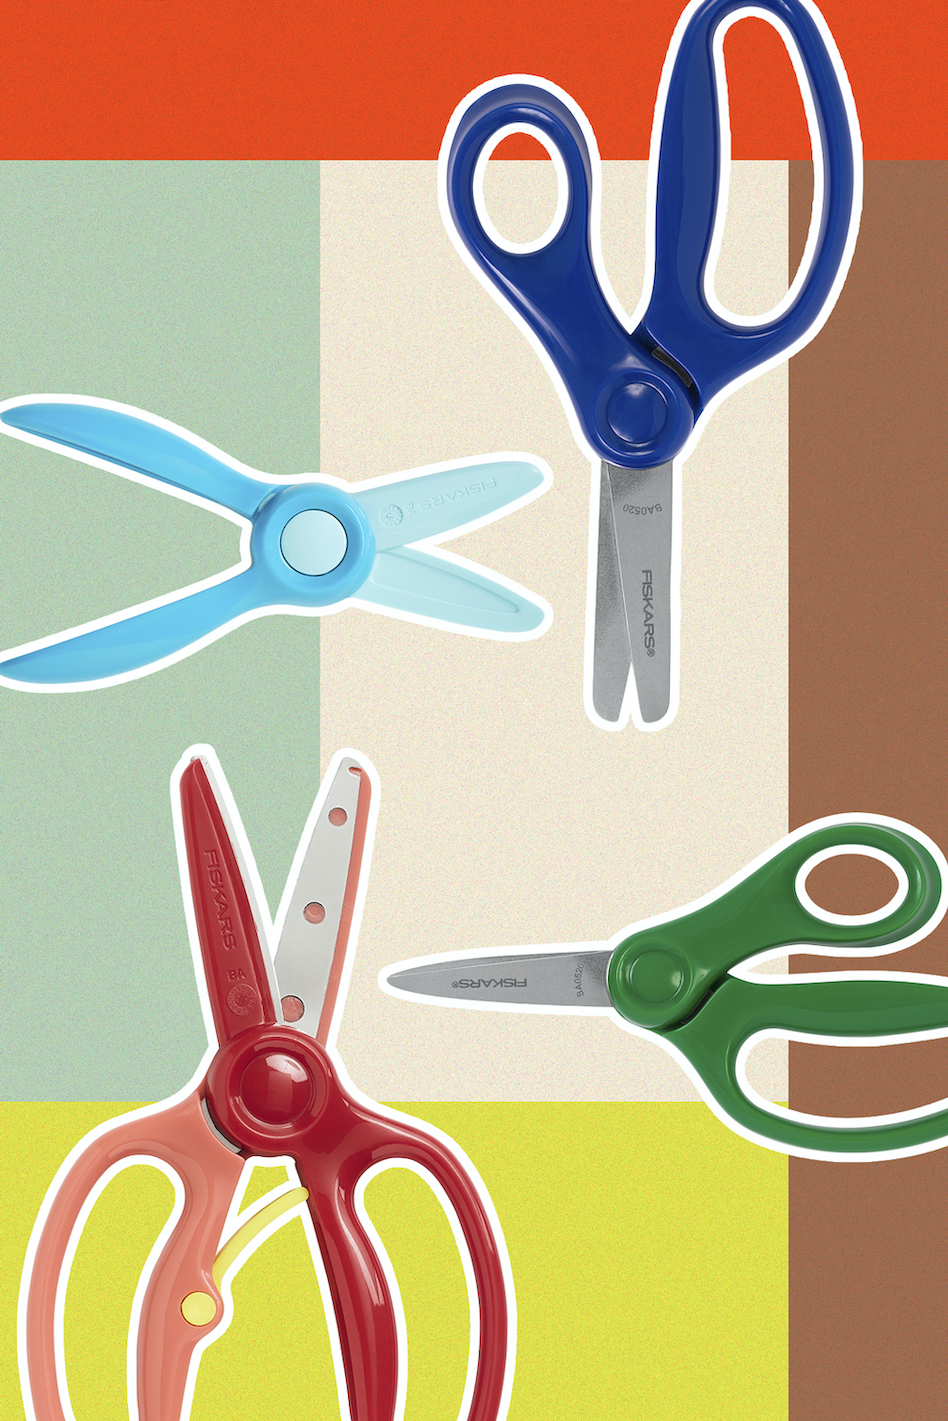 Fiskars Scissors for Kids Child-Size Scissors